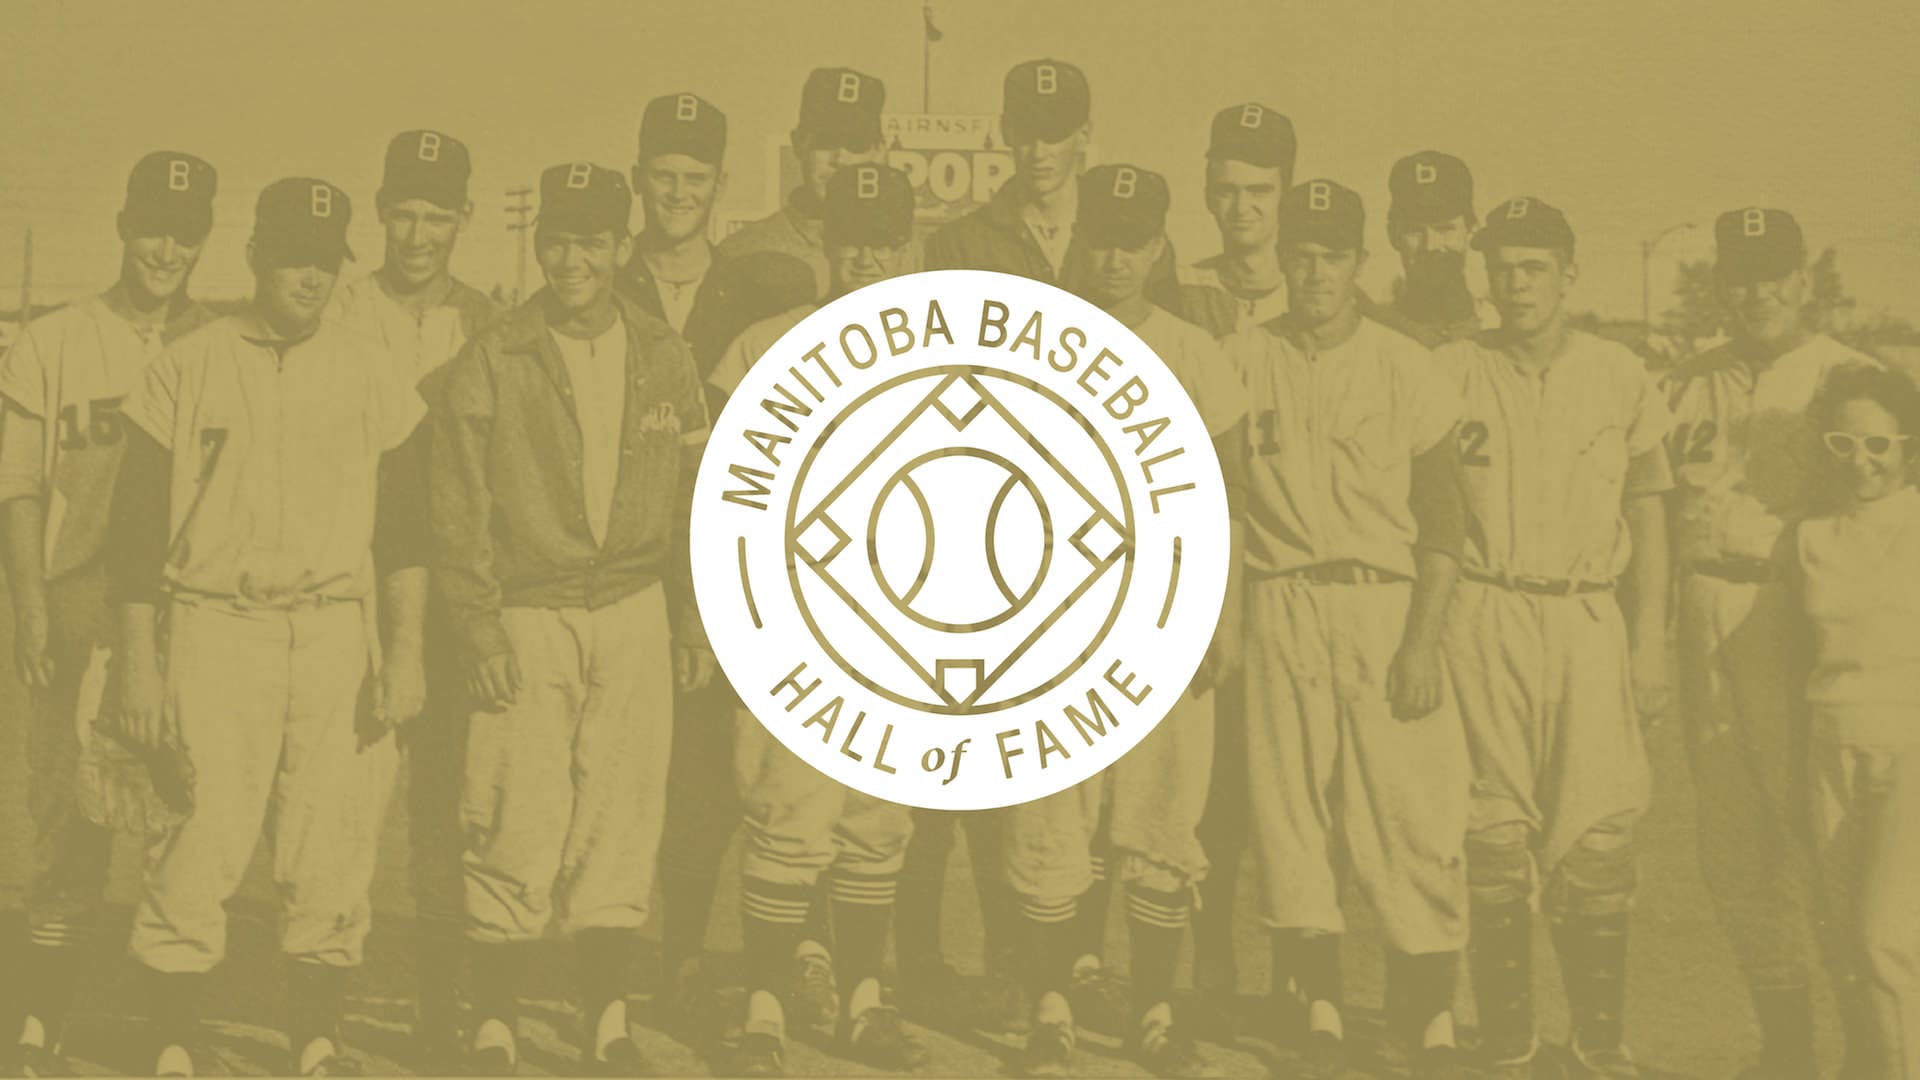 Manitoba Baseball Hall of Fame Logo